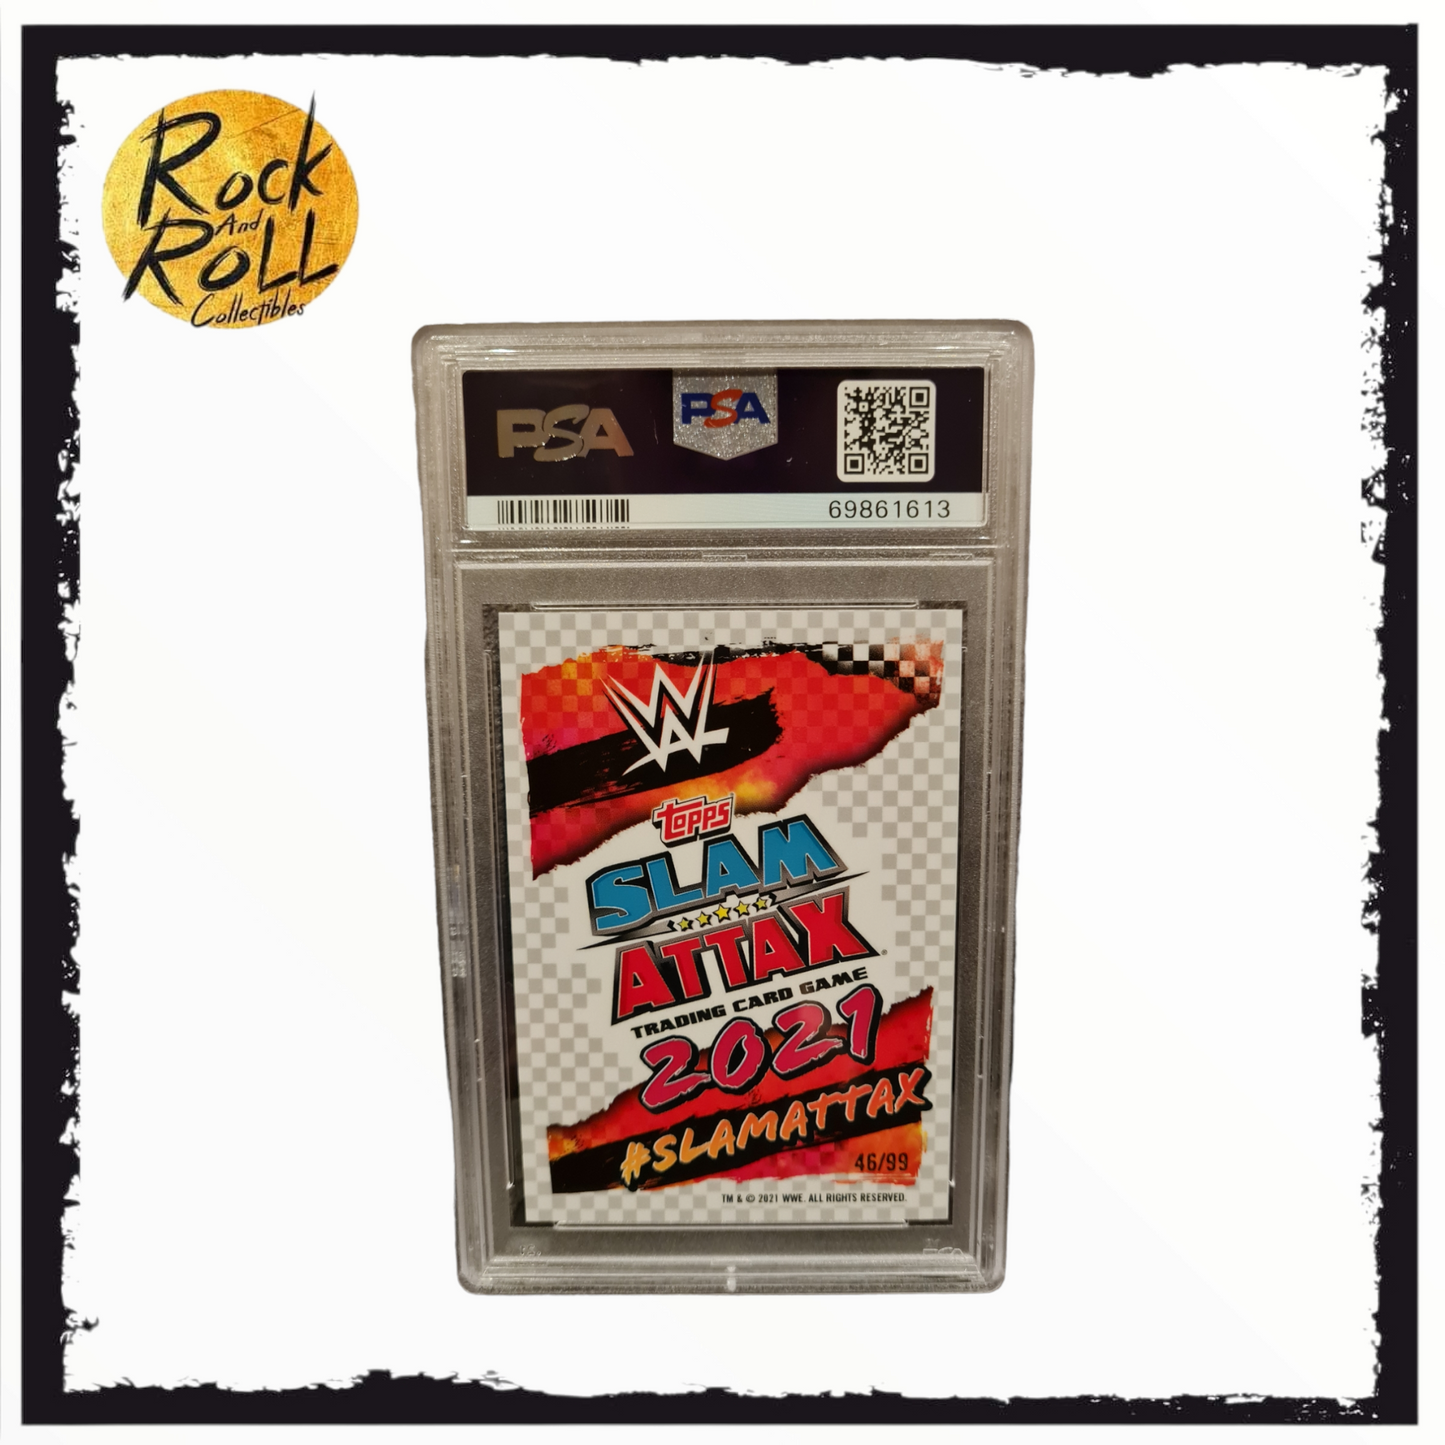 Bayley 2021 Topps Chrome WWE Slam Attax Card #145 Yellow Refractor SP 46/99 - PSA GEM MT 10